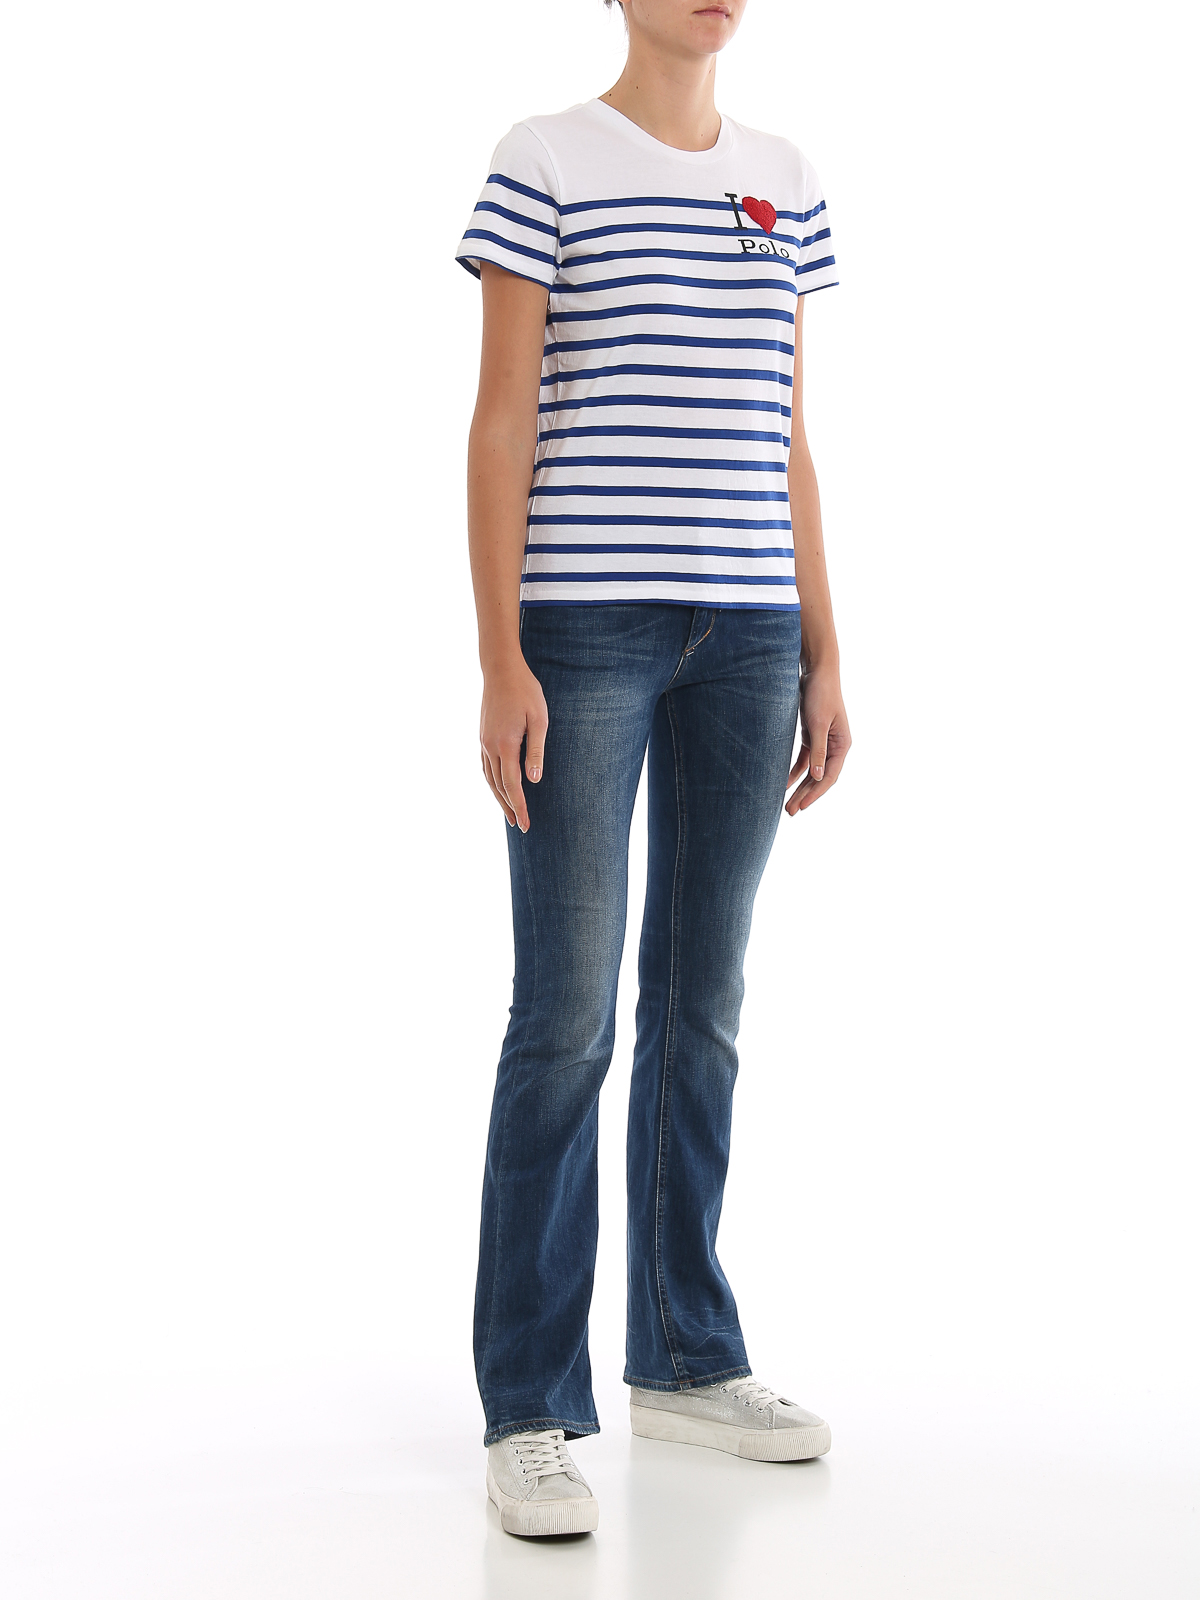 T-shirts Polo Ralph Lauren - I love Polo striped T-shirt - 211754351001